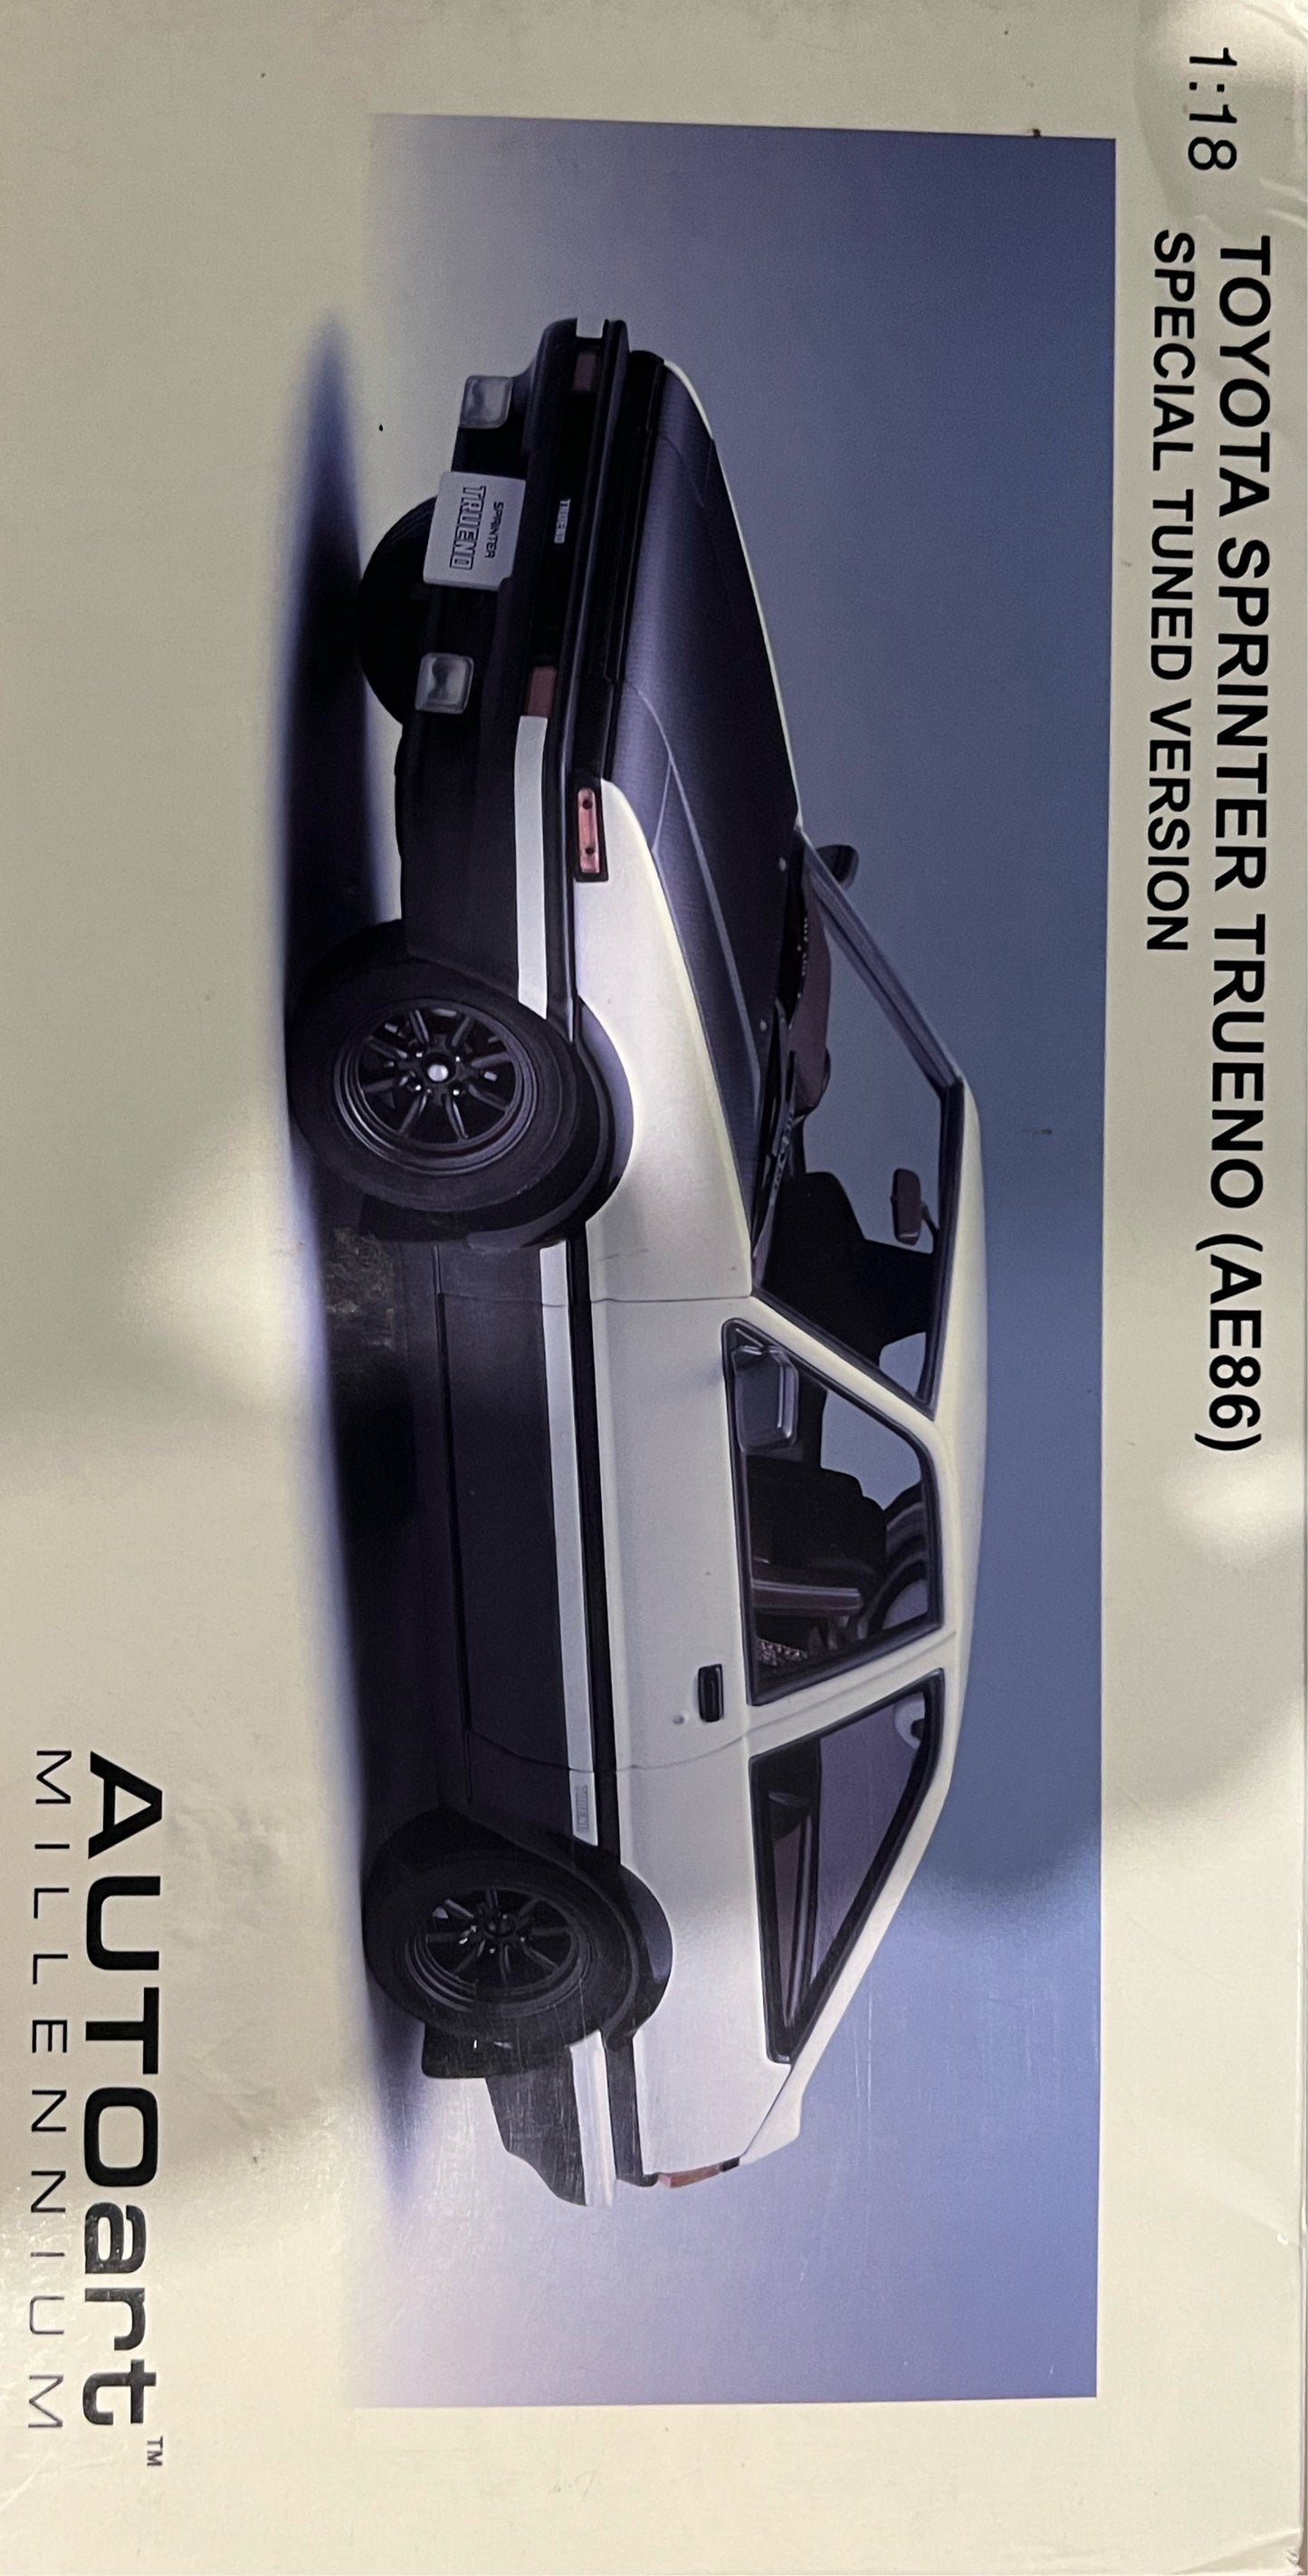 1:18 AUTOart Toyota Sprinter Trueno AE86 Special Tuned Version (White with Black Bonnet) Car Model